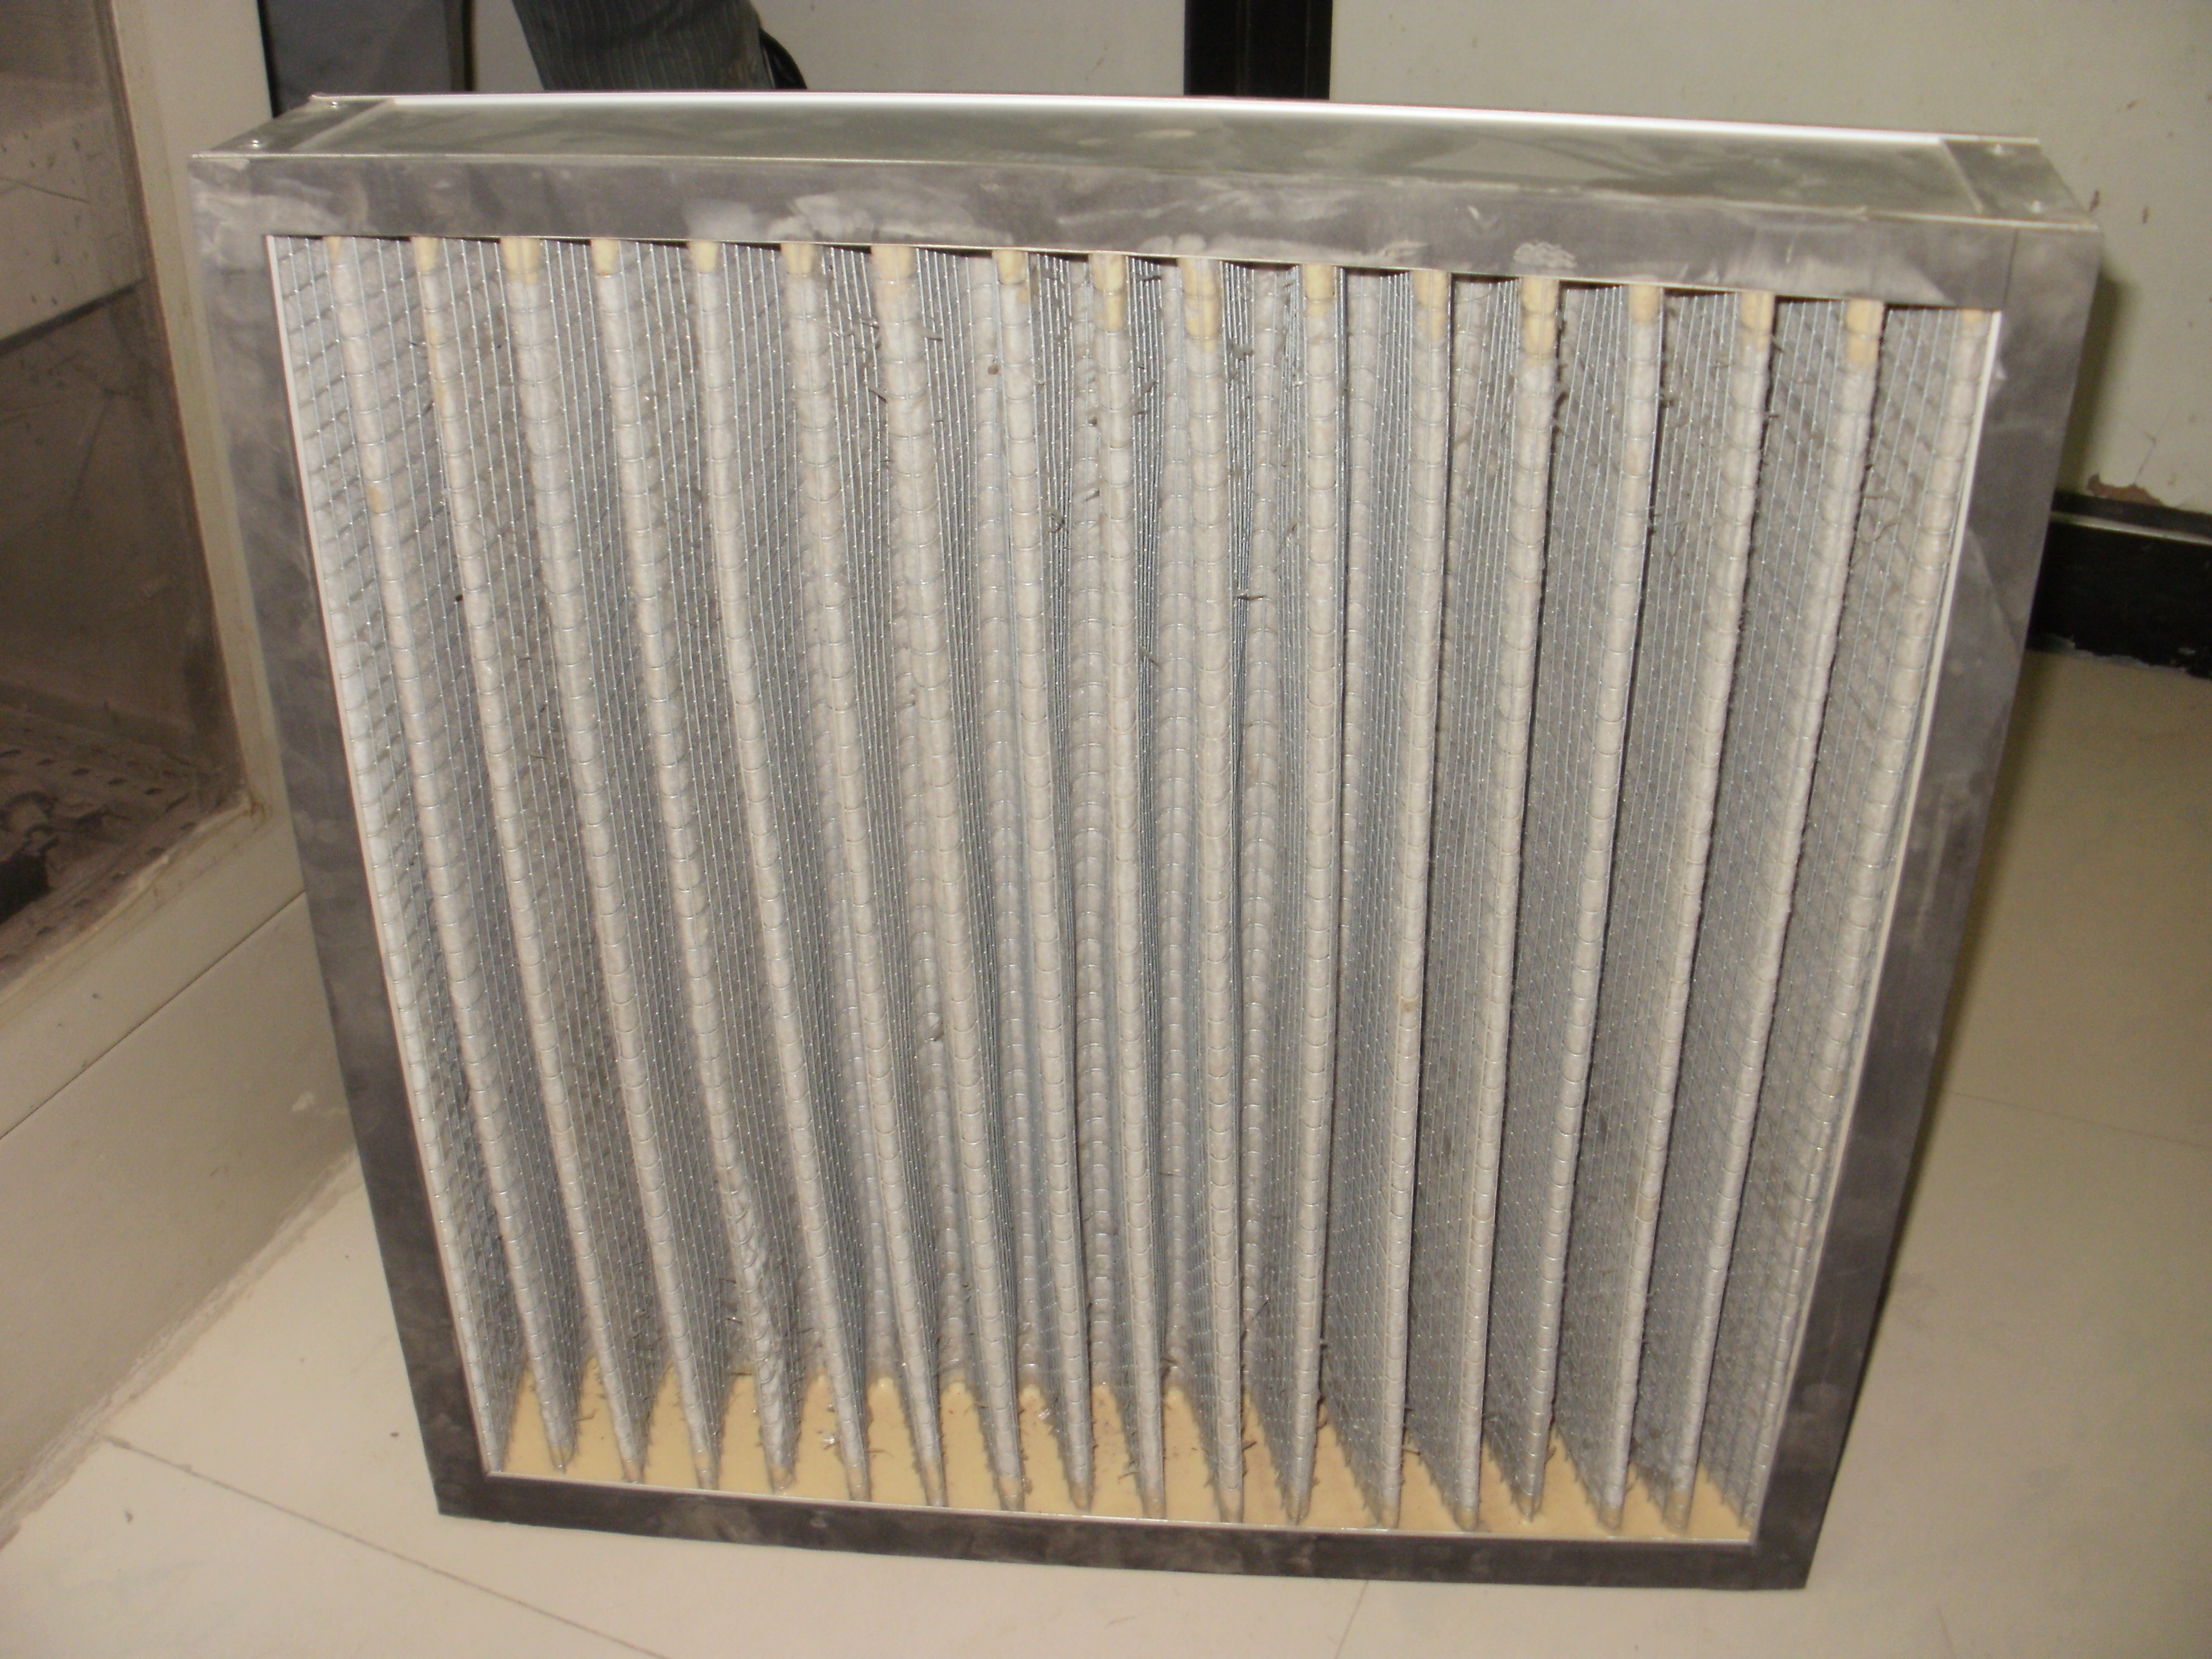 Panel Air Filter System